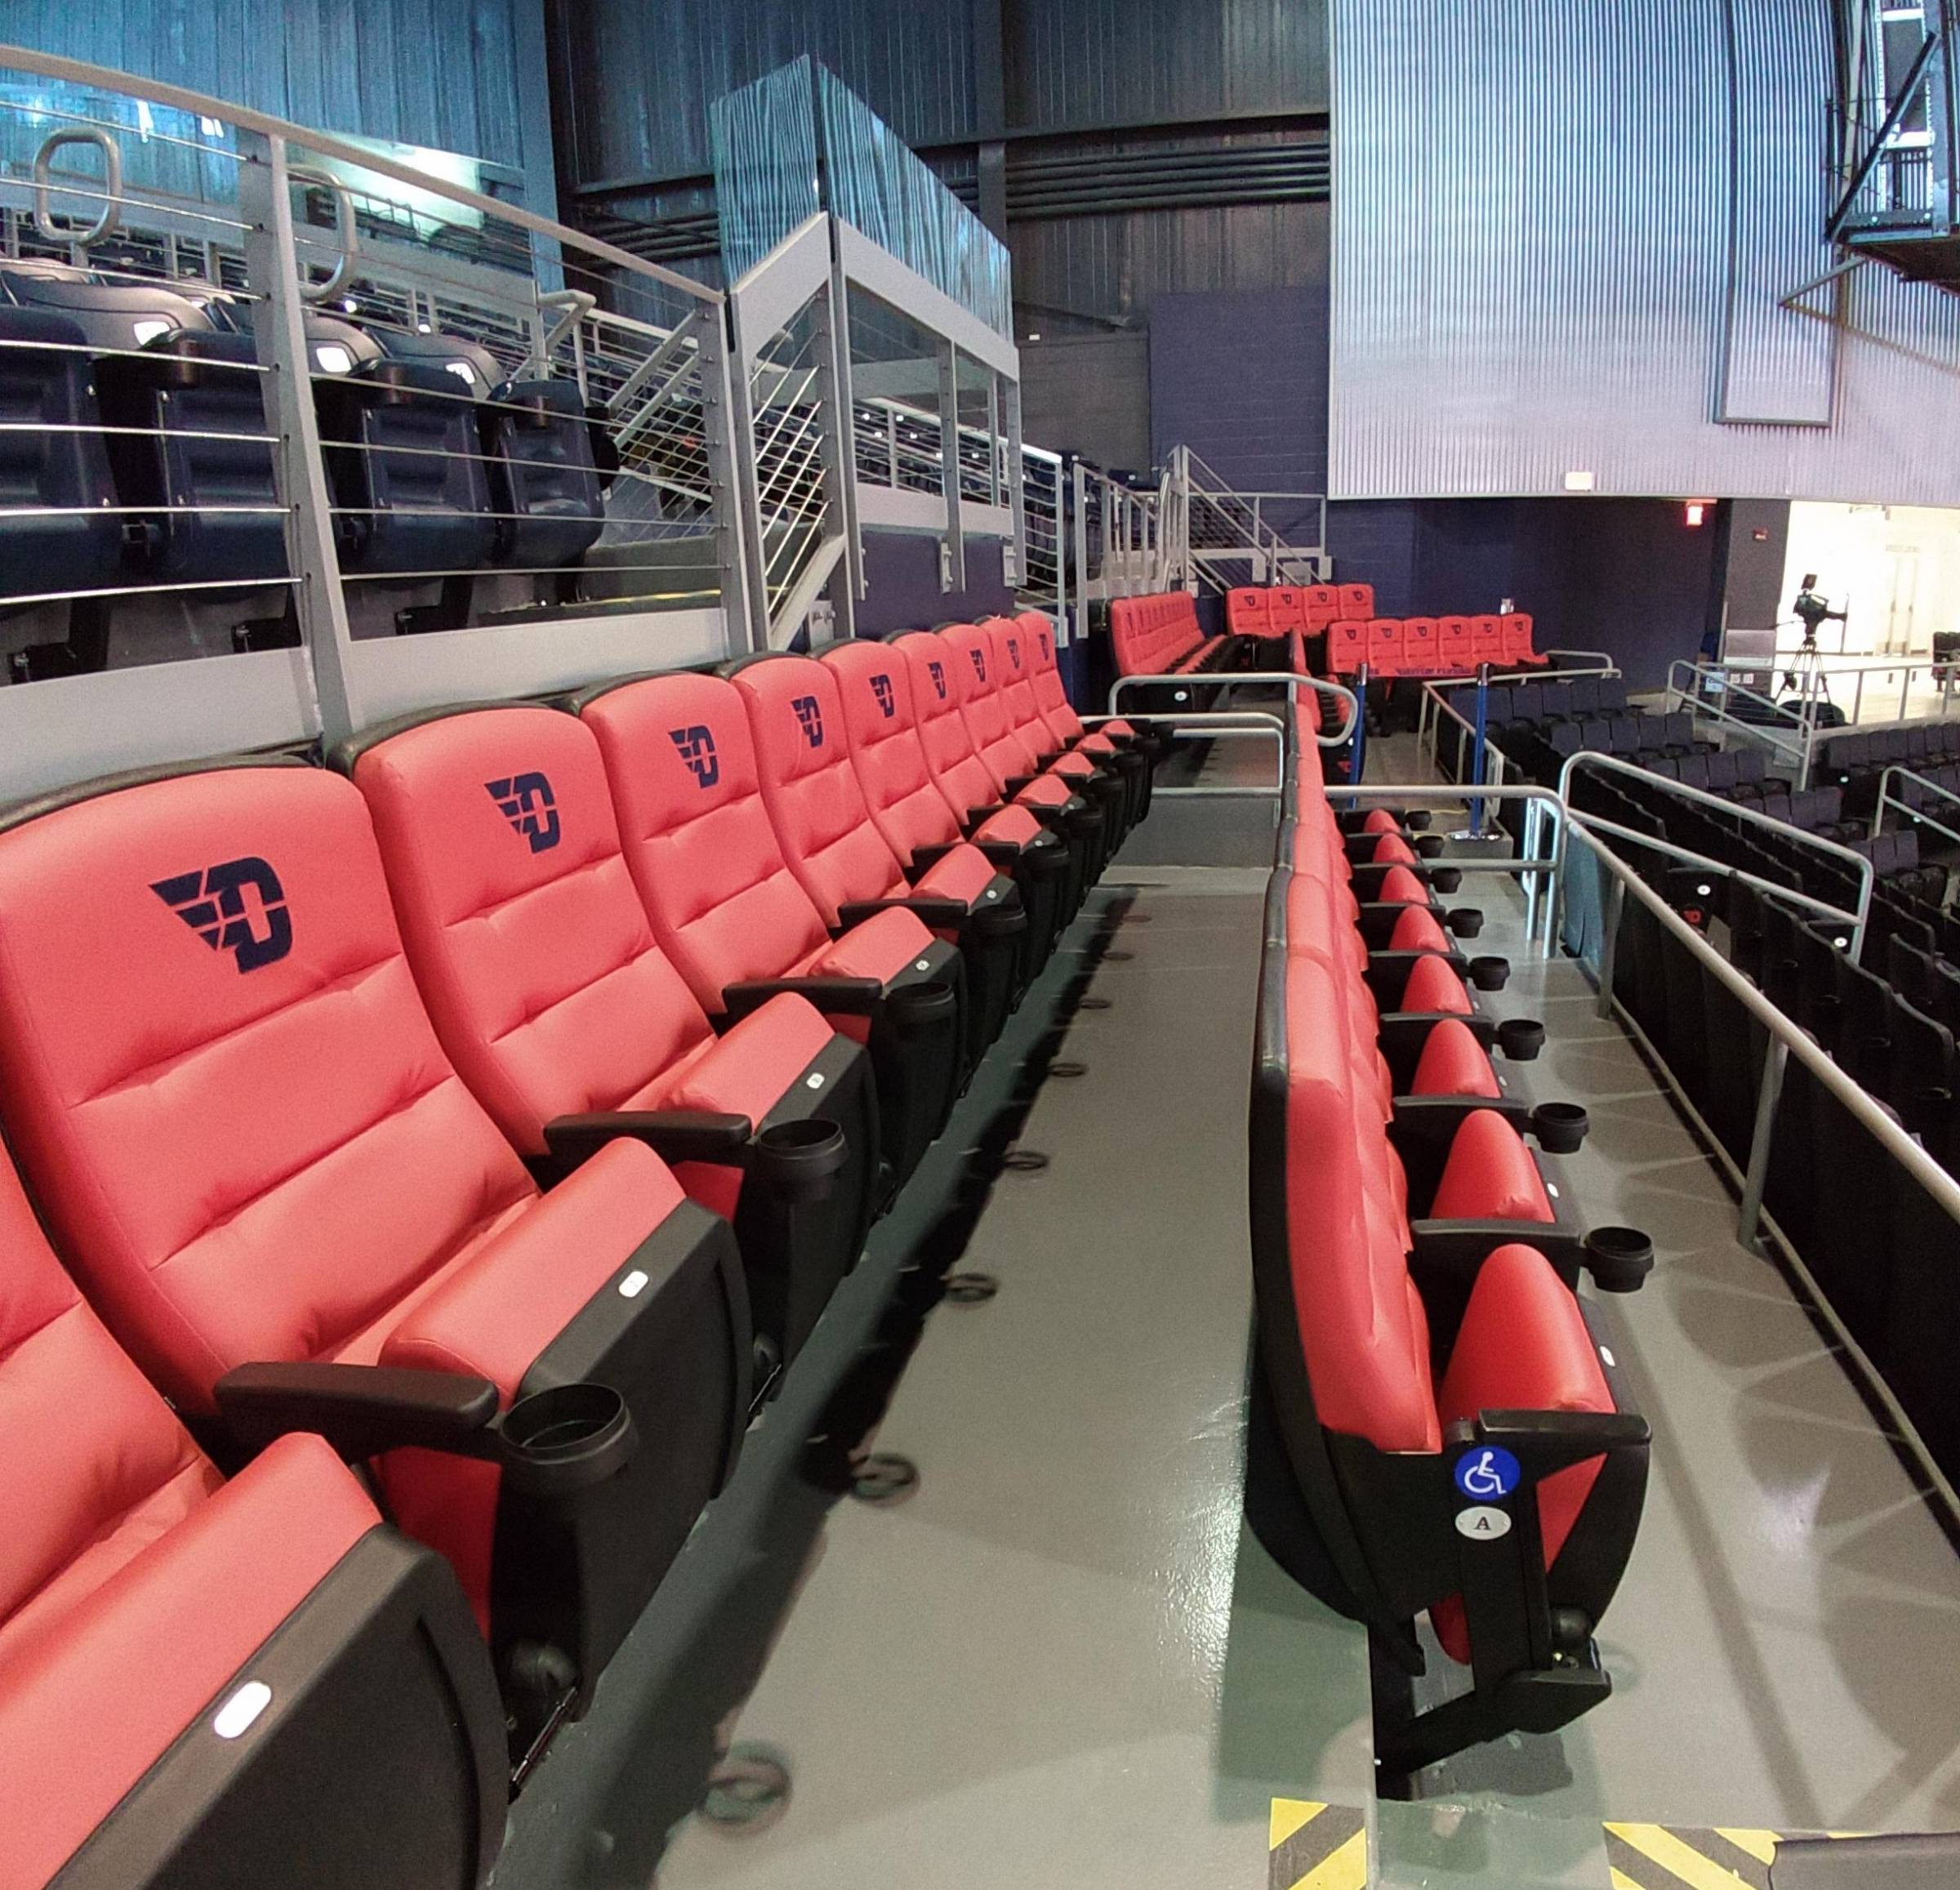 Club Seating at UD Arena